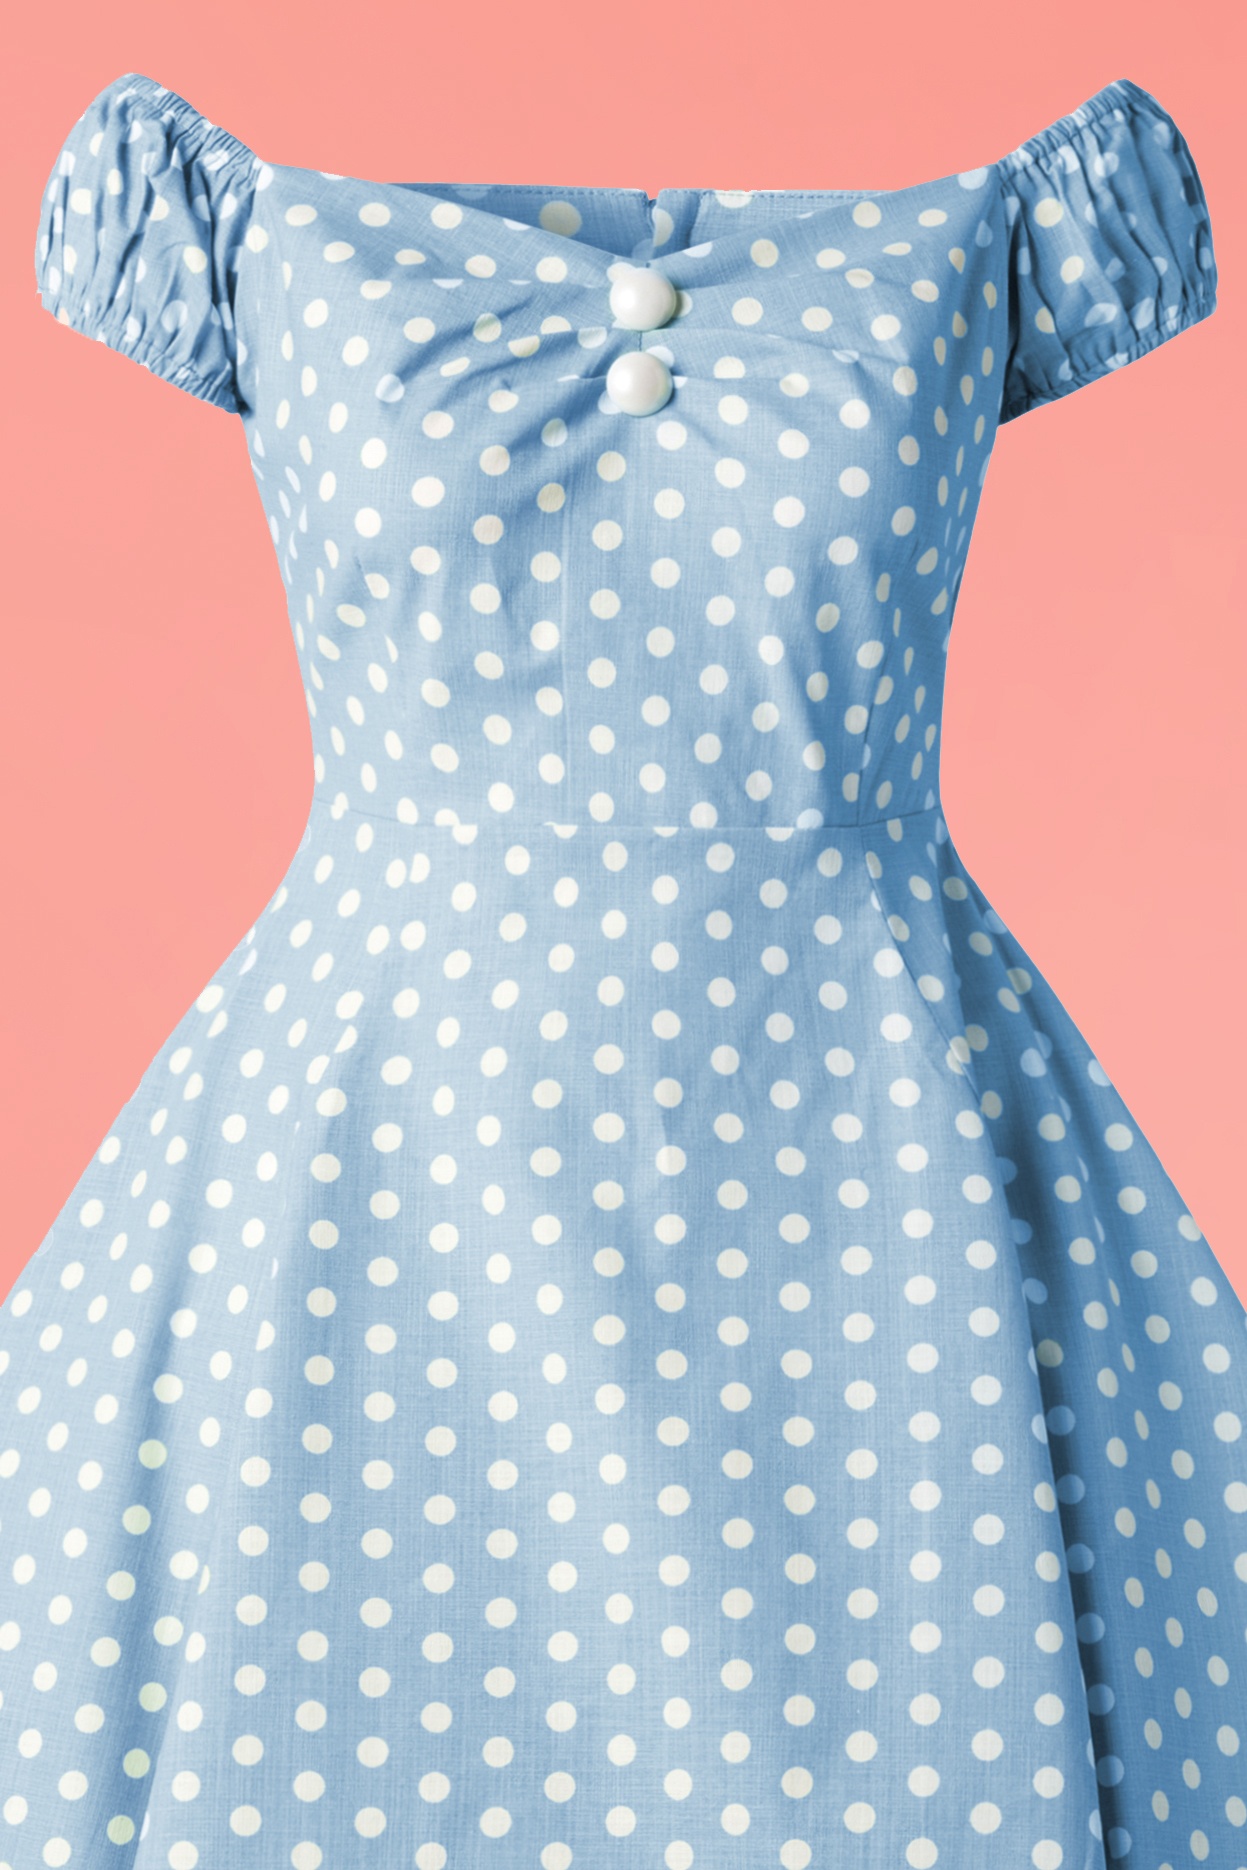 Collectif Clothing - Dolores Polkadot pop-swingjurk in donkerblauw en wit 4